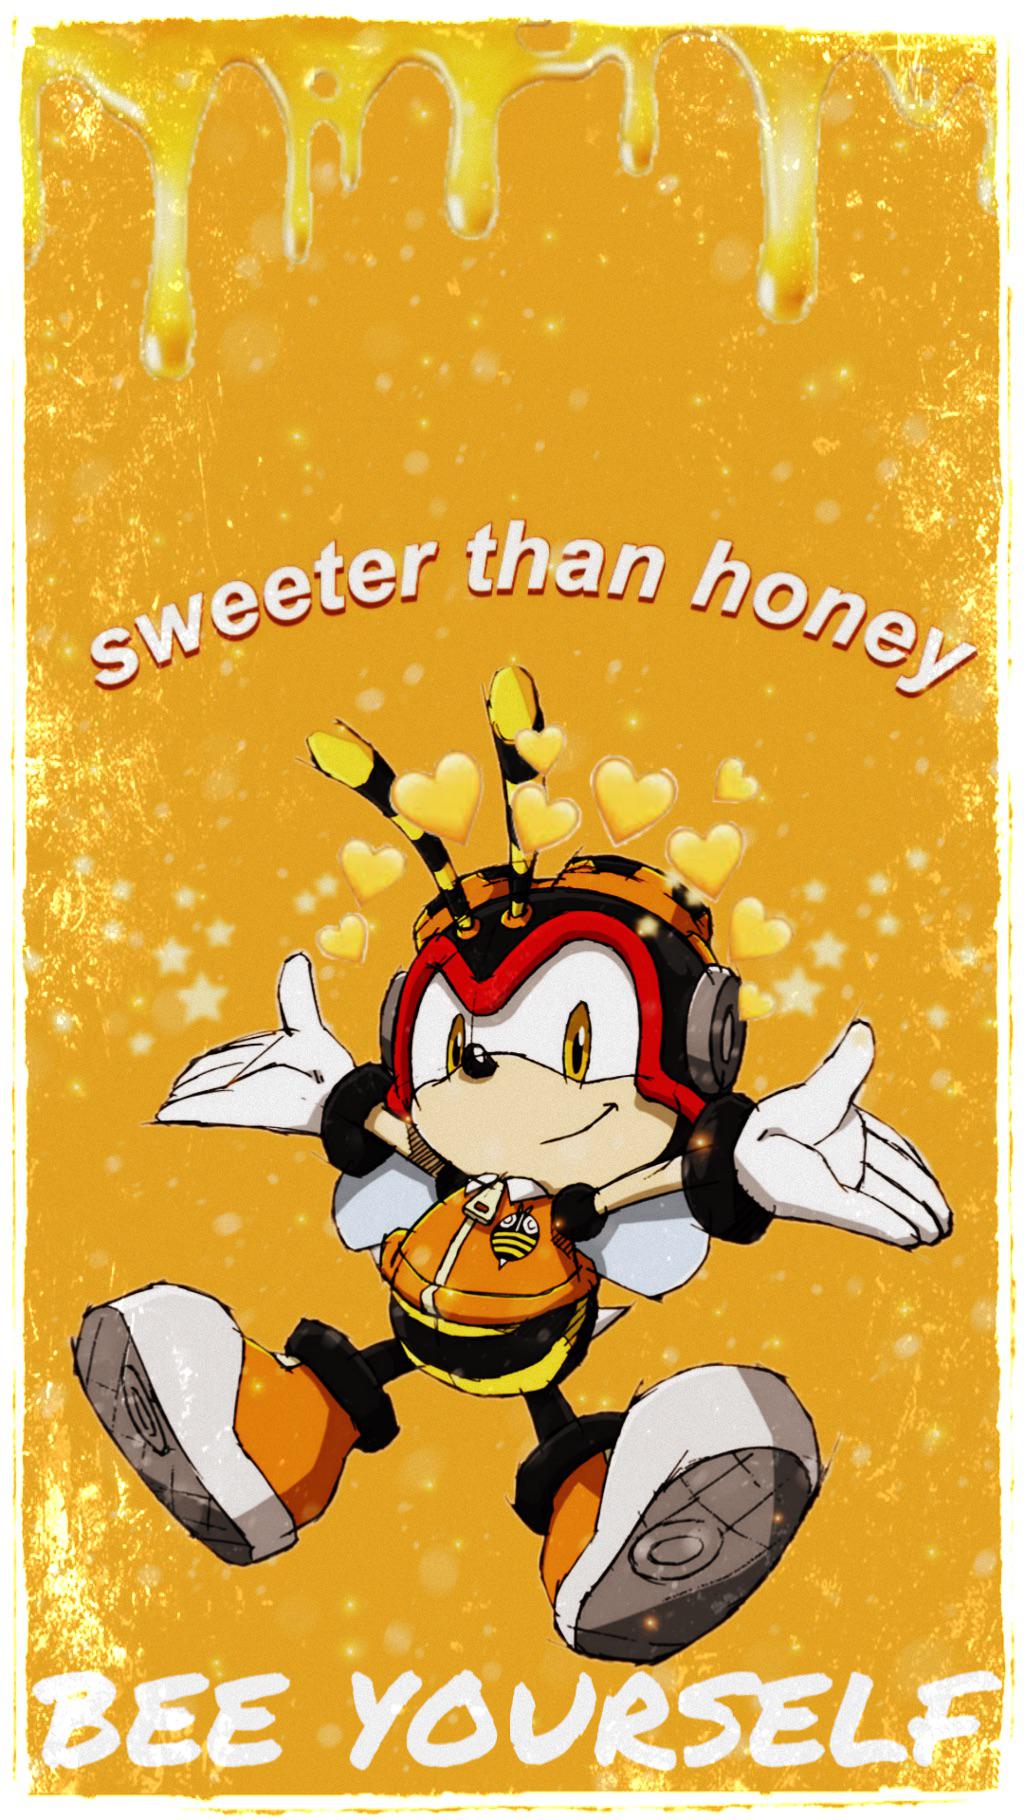 Sweeter than honey: bee yourself Bee (Not my artwork)